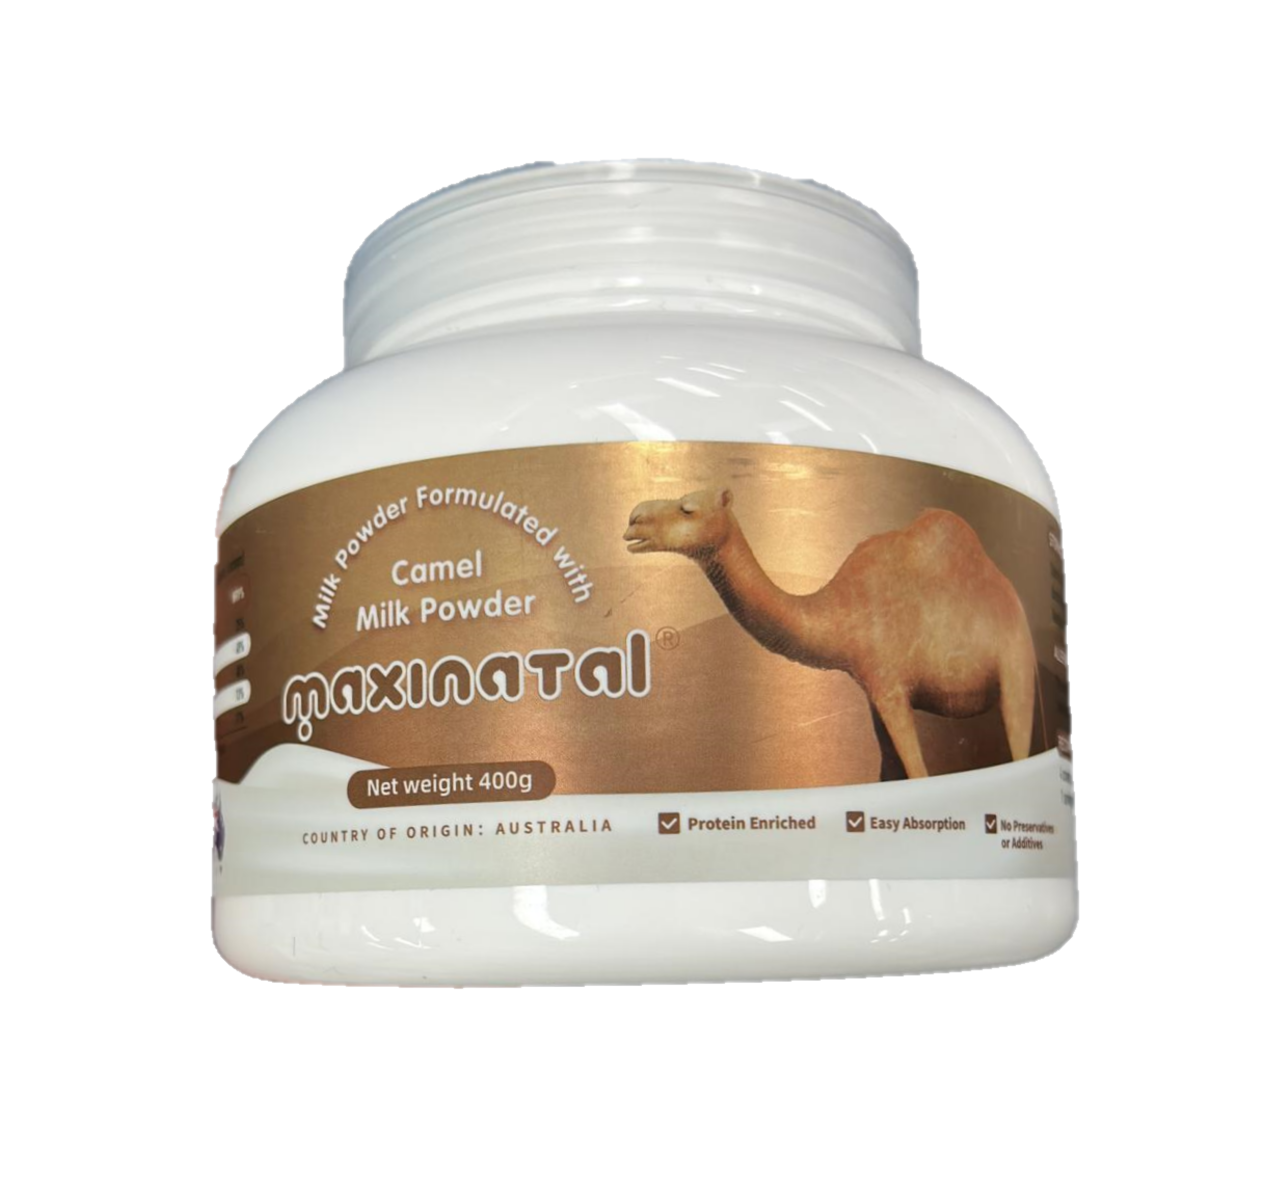 Maxinatal Camel Milk Powder 2 x 400g Special Bundle